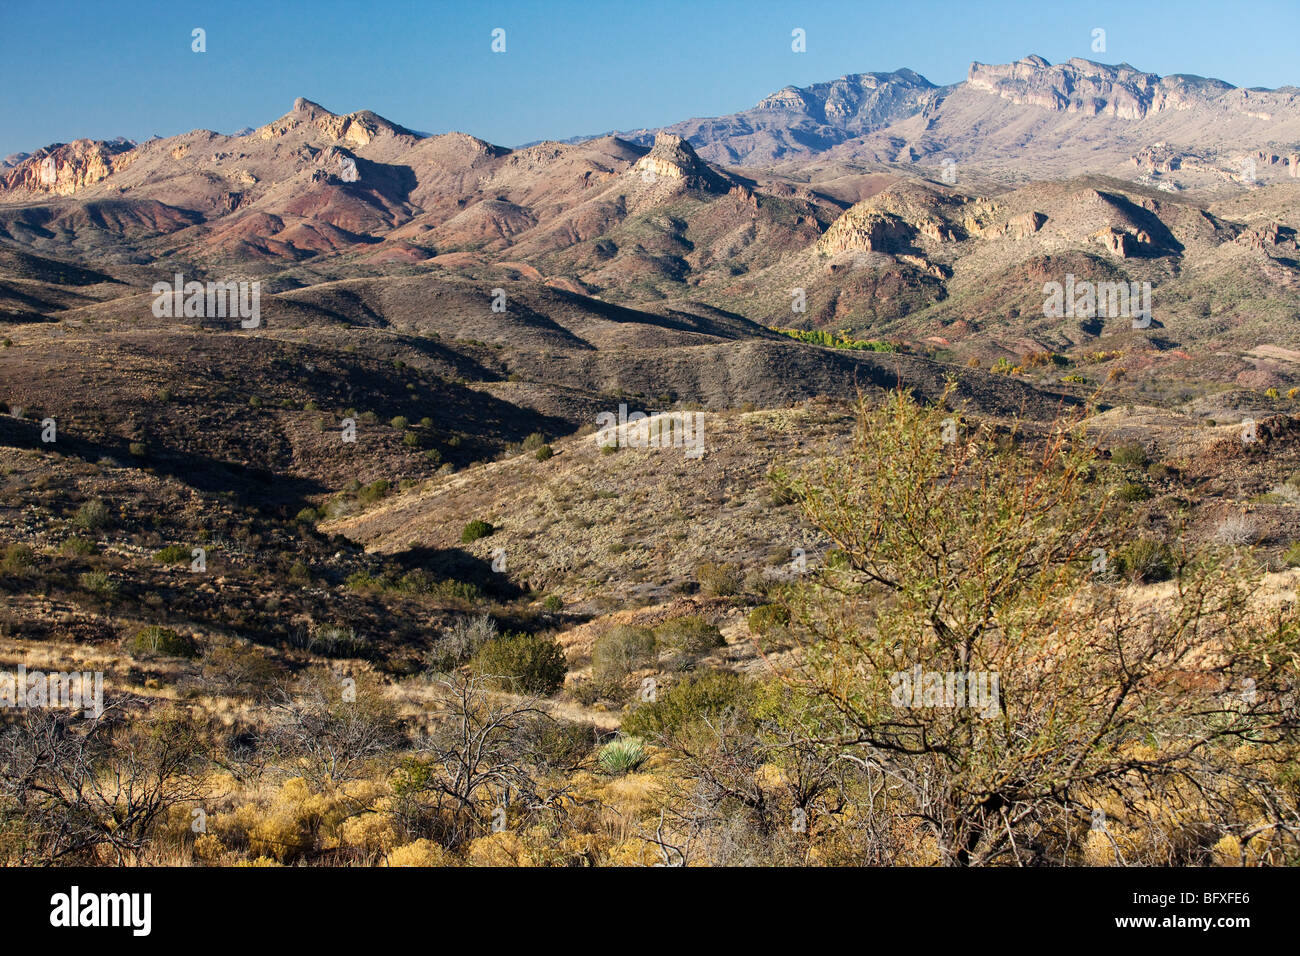 Galiuro Mountains seen along the scenic Vista Trail, Muleshoe Ranch, Arizona Stock Photo